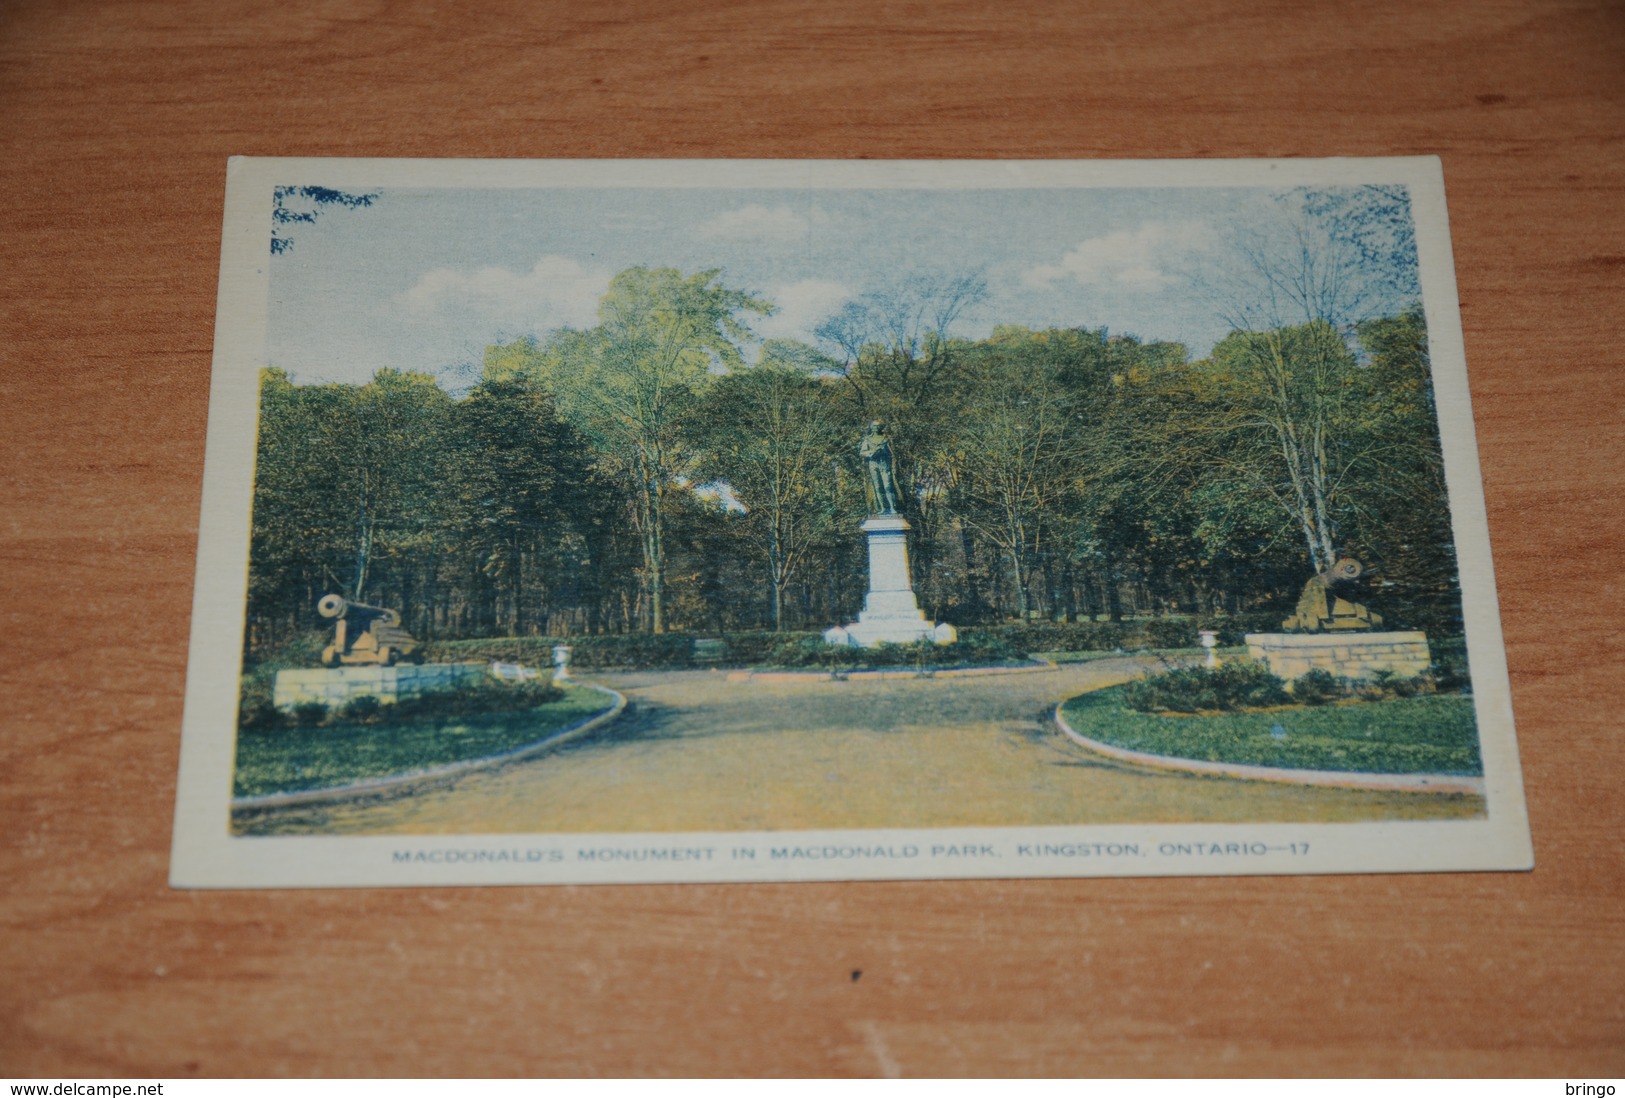 3053-           CANADA, ONTARIO, KINGSTON, MACDONALD'S MONUMENT IN MACDONALD PARK - Kingston